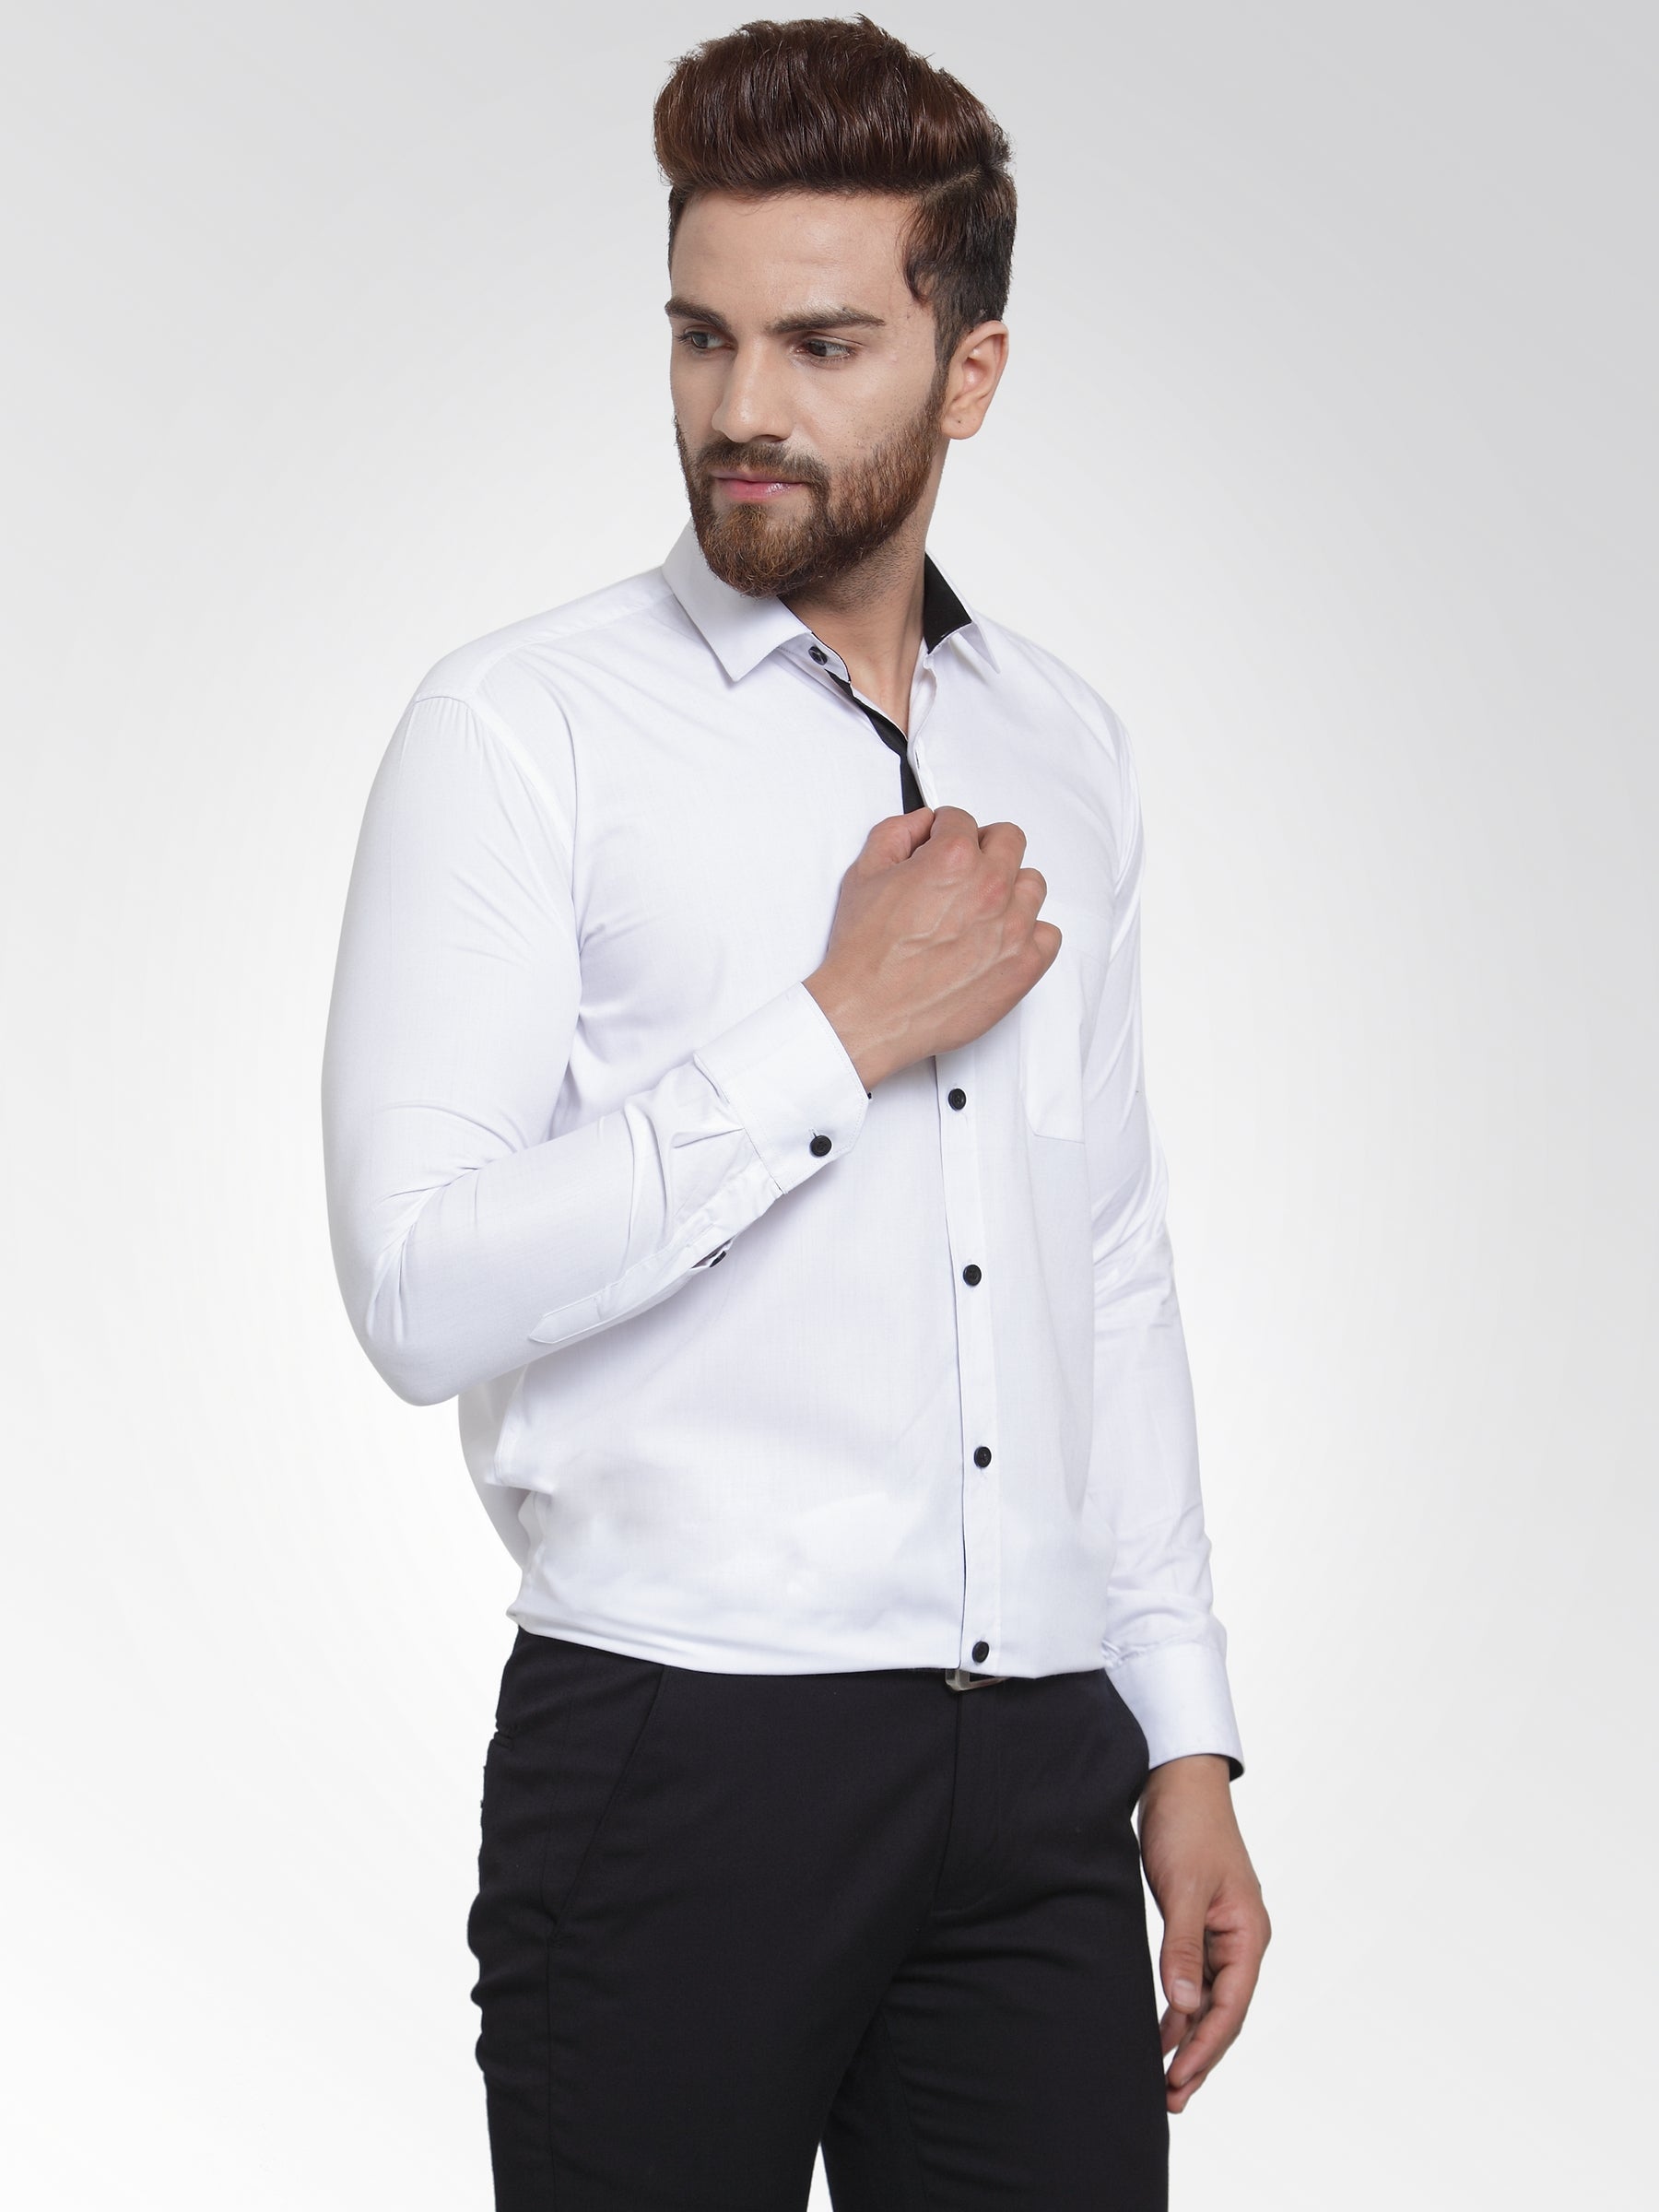 Men's White Formal Shirt with black detailing ( SF 411White ) - Jainish